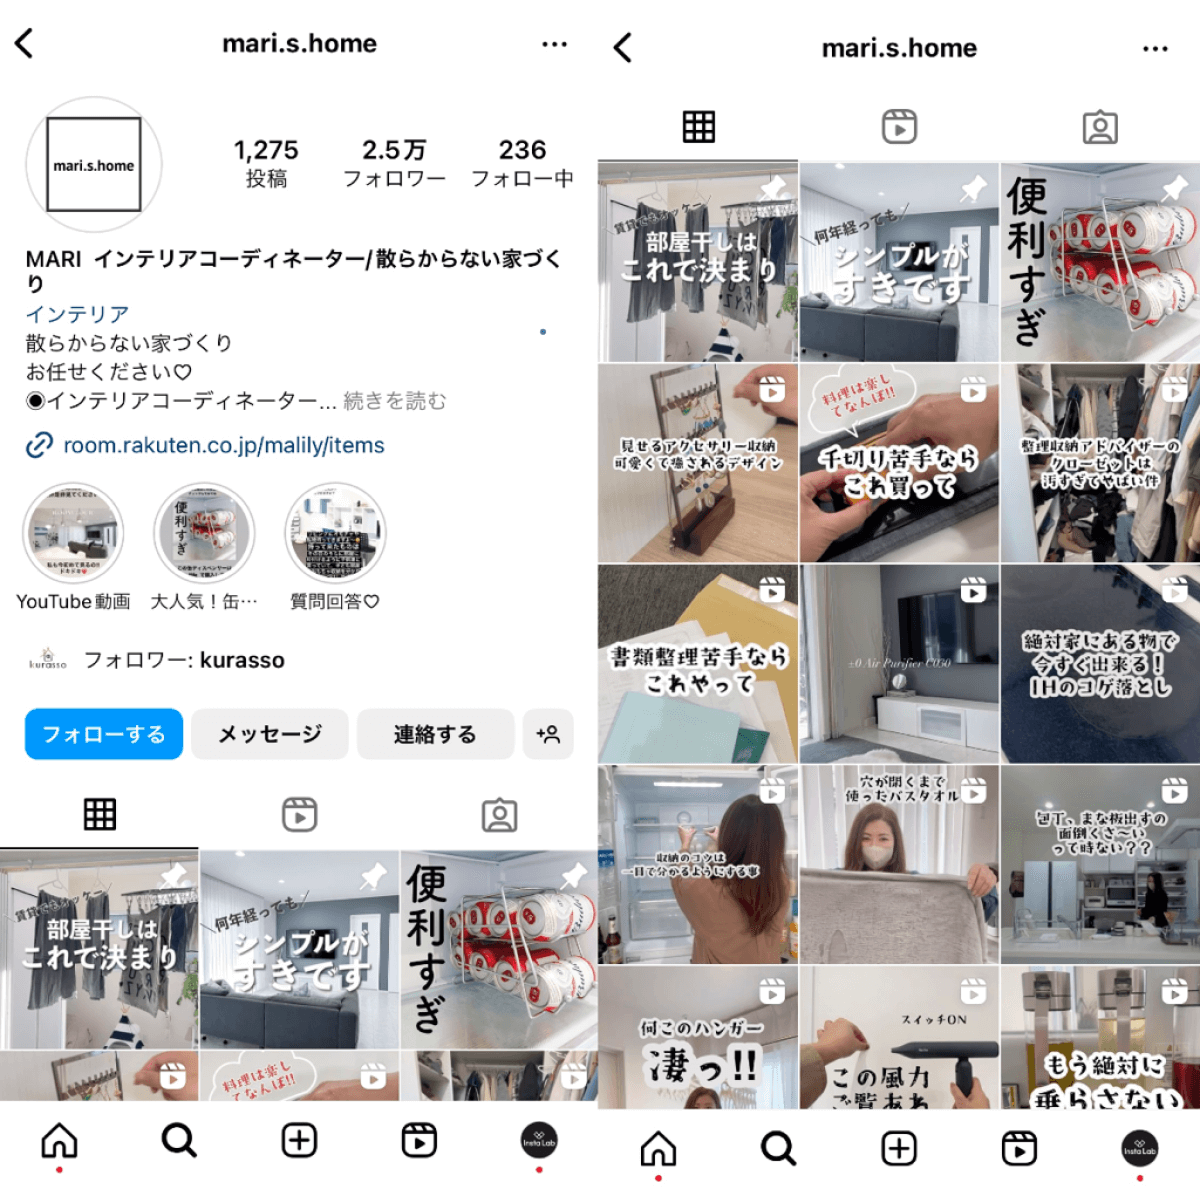 instagram-account-mari-s-home